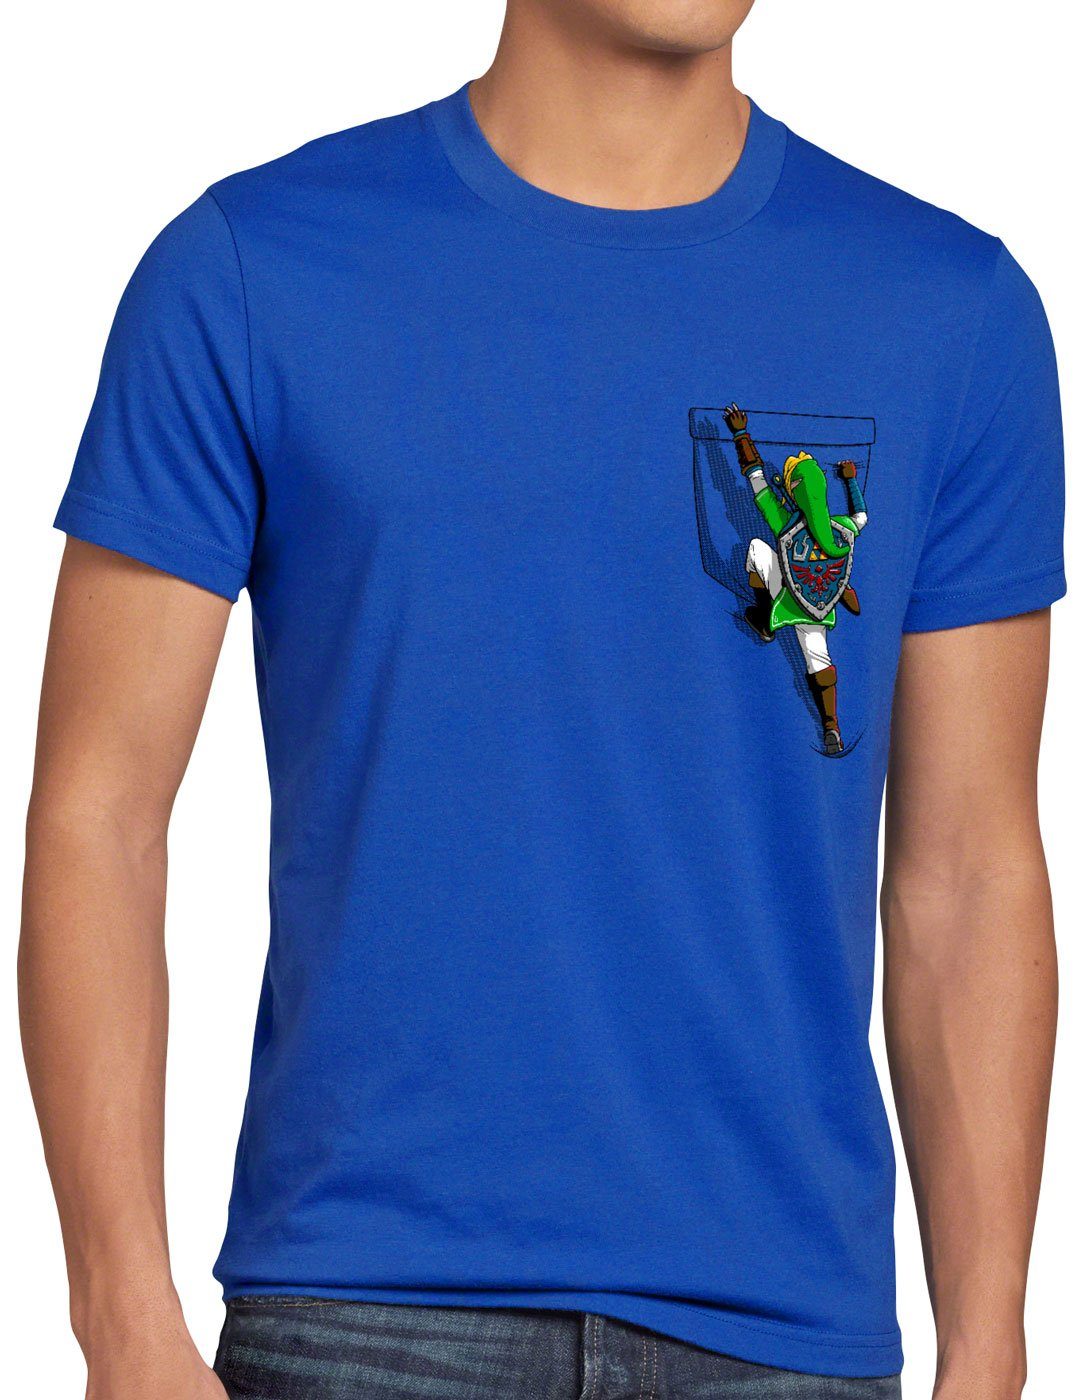 style3 Print-Shirt Herren T-Shirt Link Brusttasche wild switch the breath of snes ocarina blau